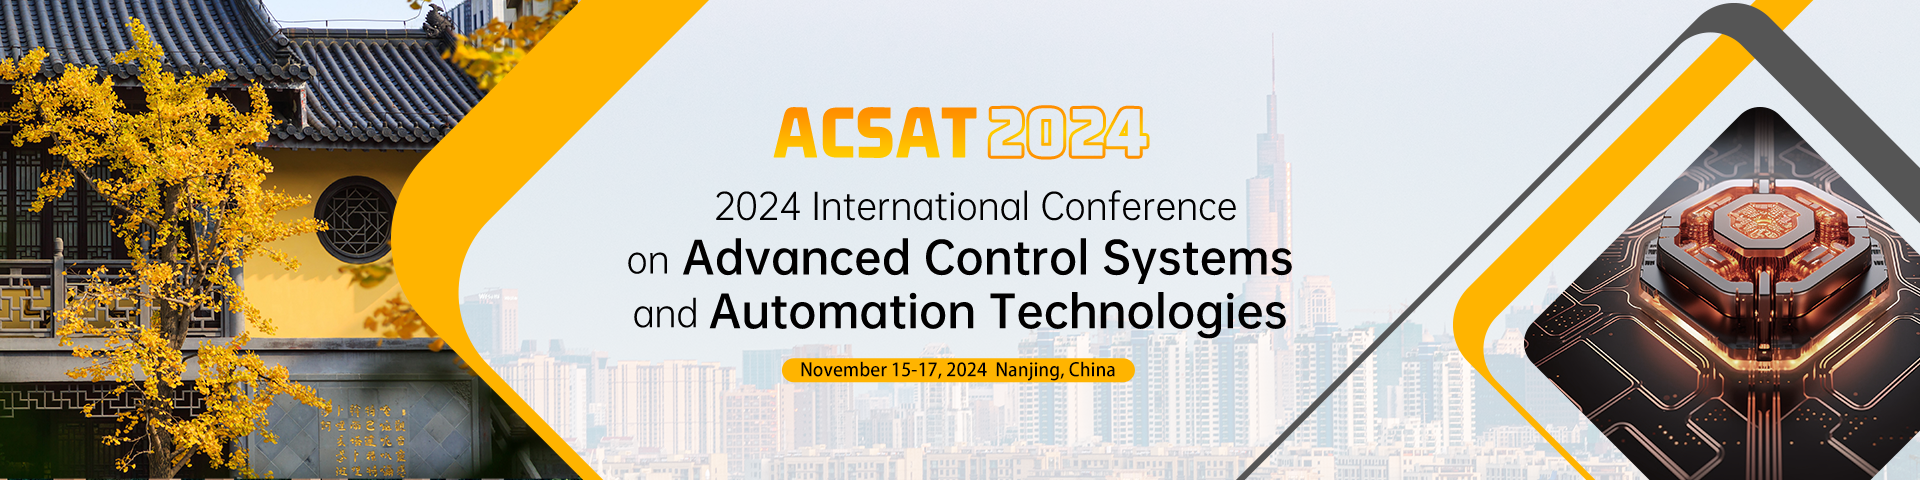 2、ACSAT 2024 会议官网英文.png